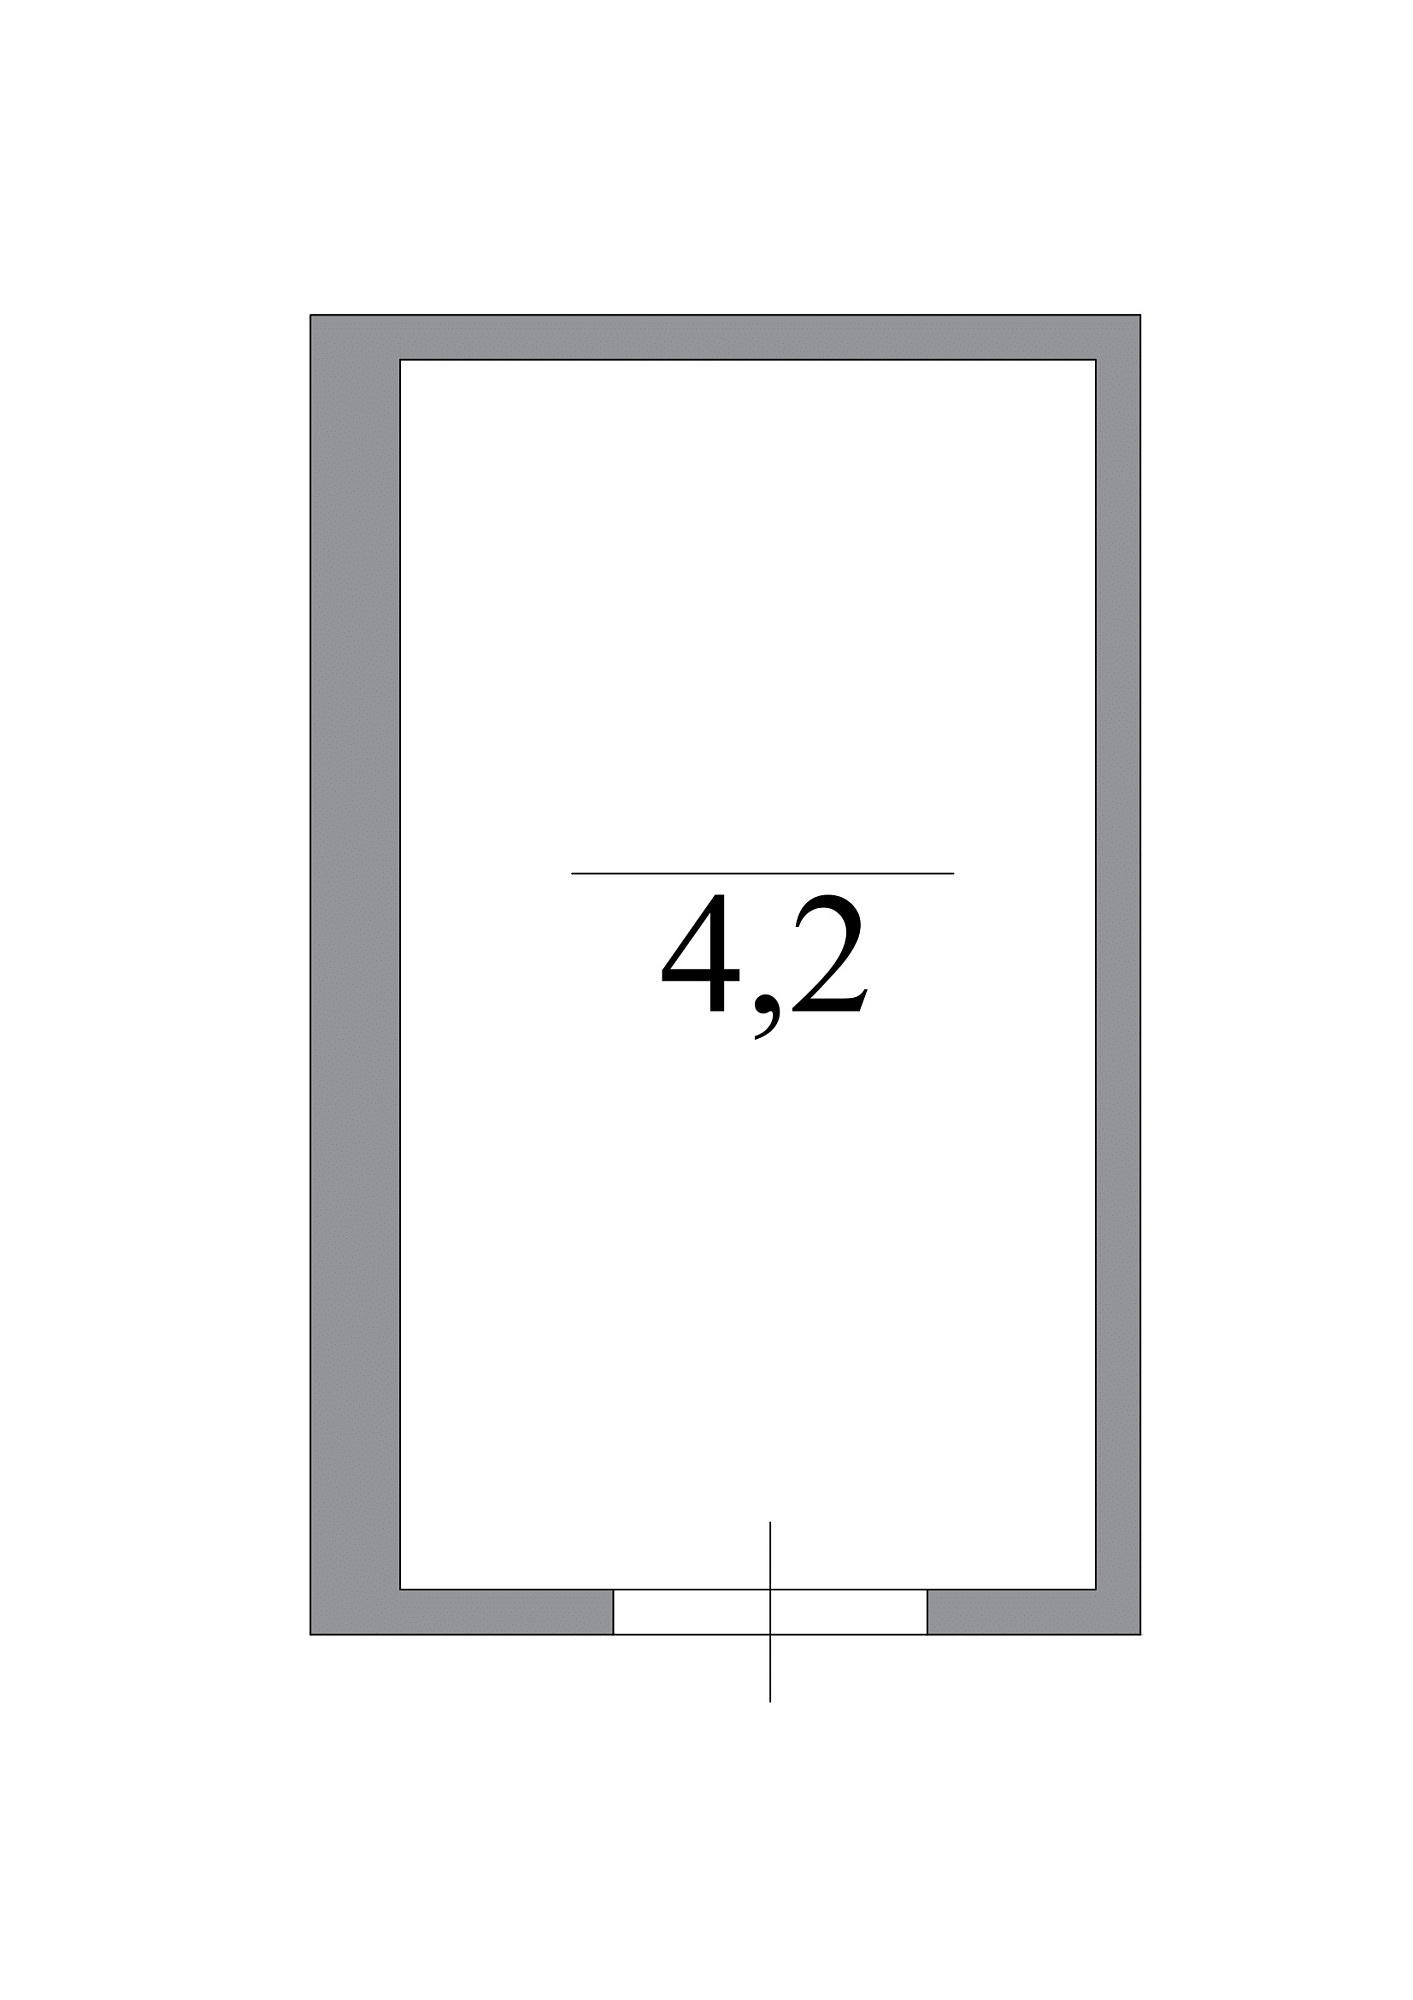 Planning Storeroom area 4.2m2, AB-07-м1/К0030.